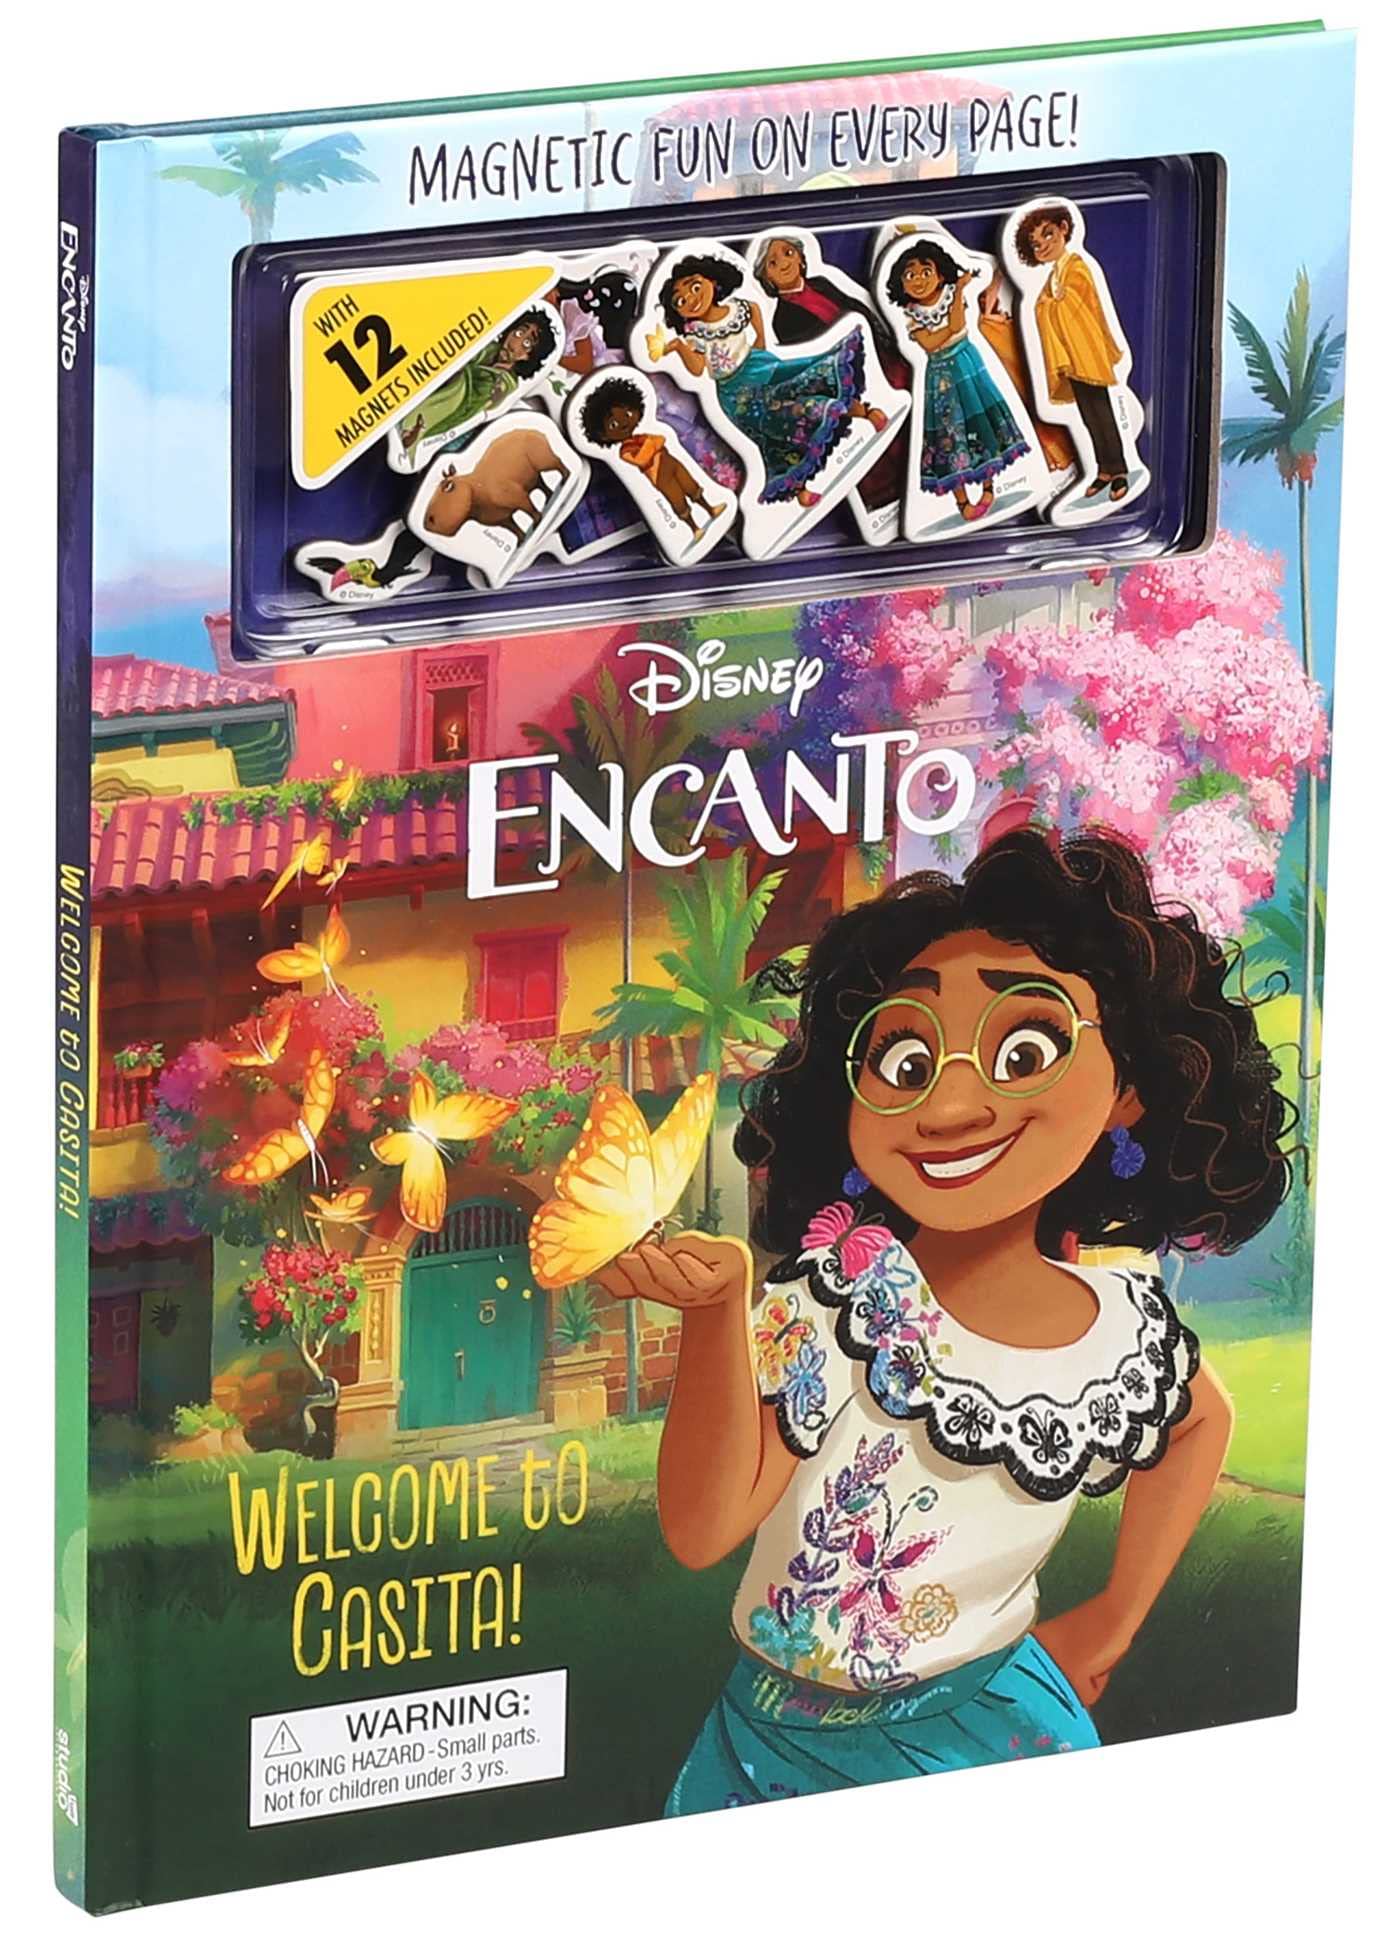 Disney Encanto: Welcome to Casita! (Magnetic Hardcover)